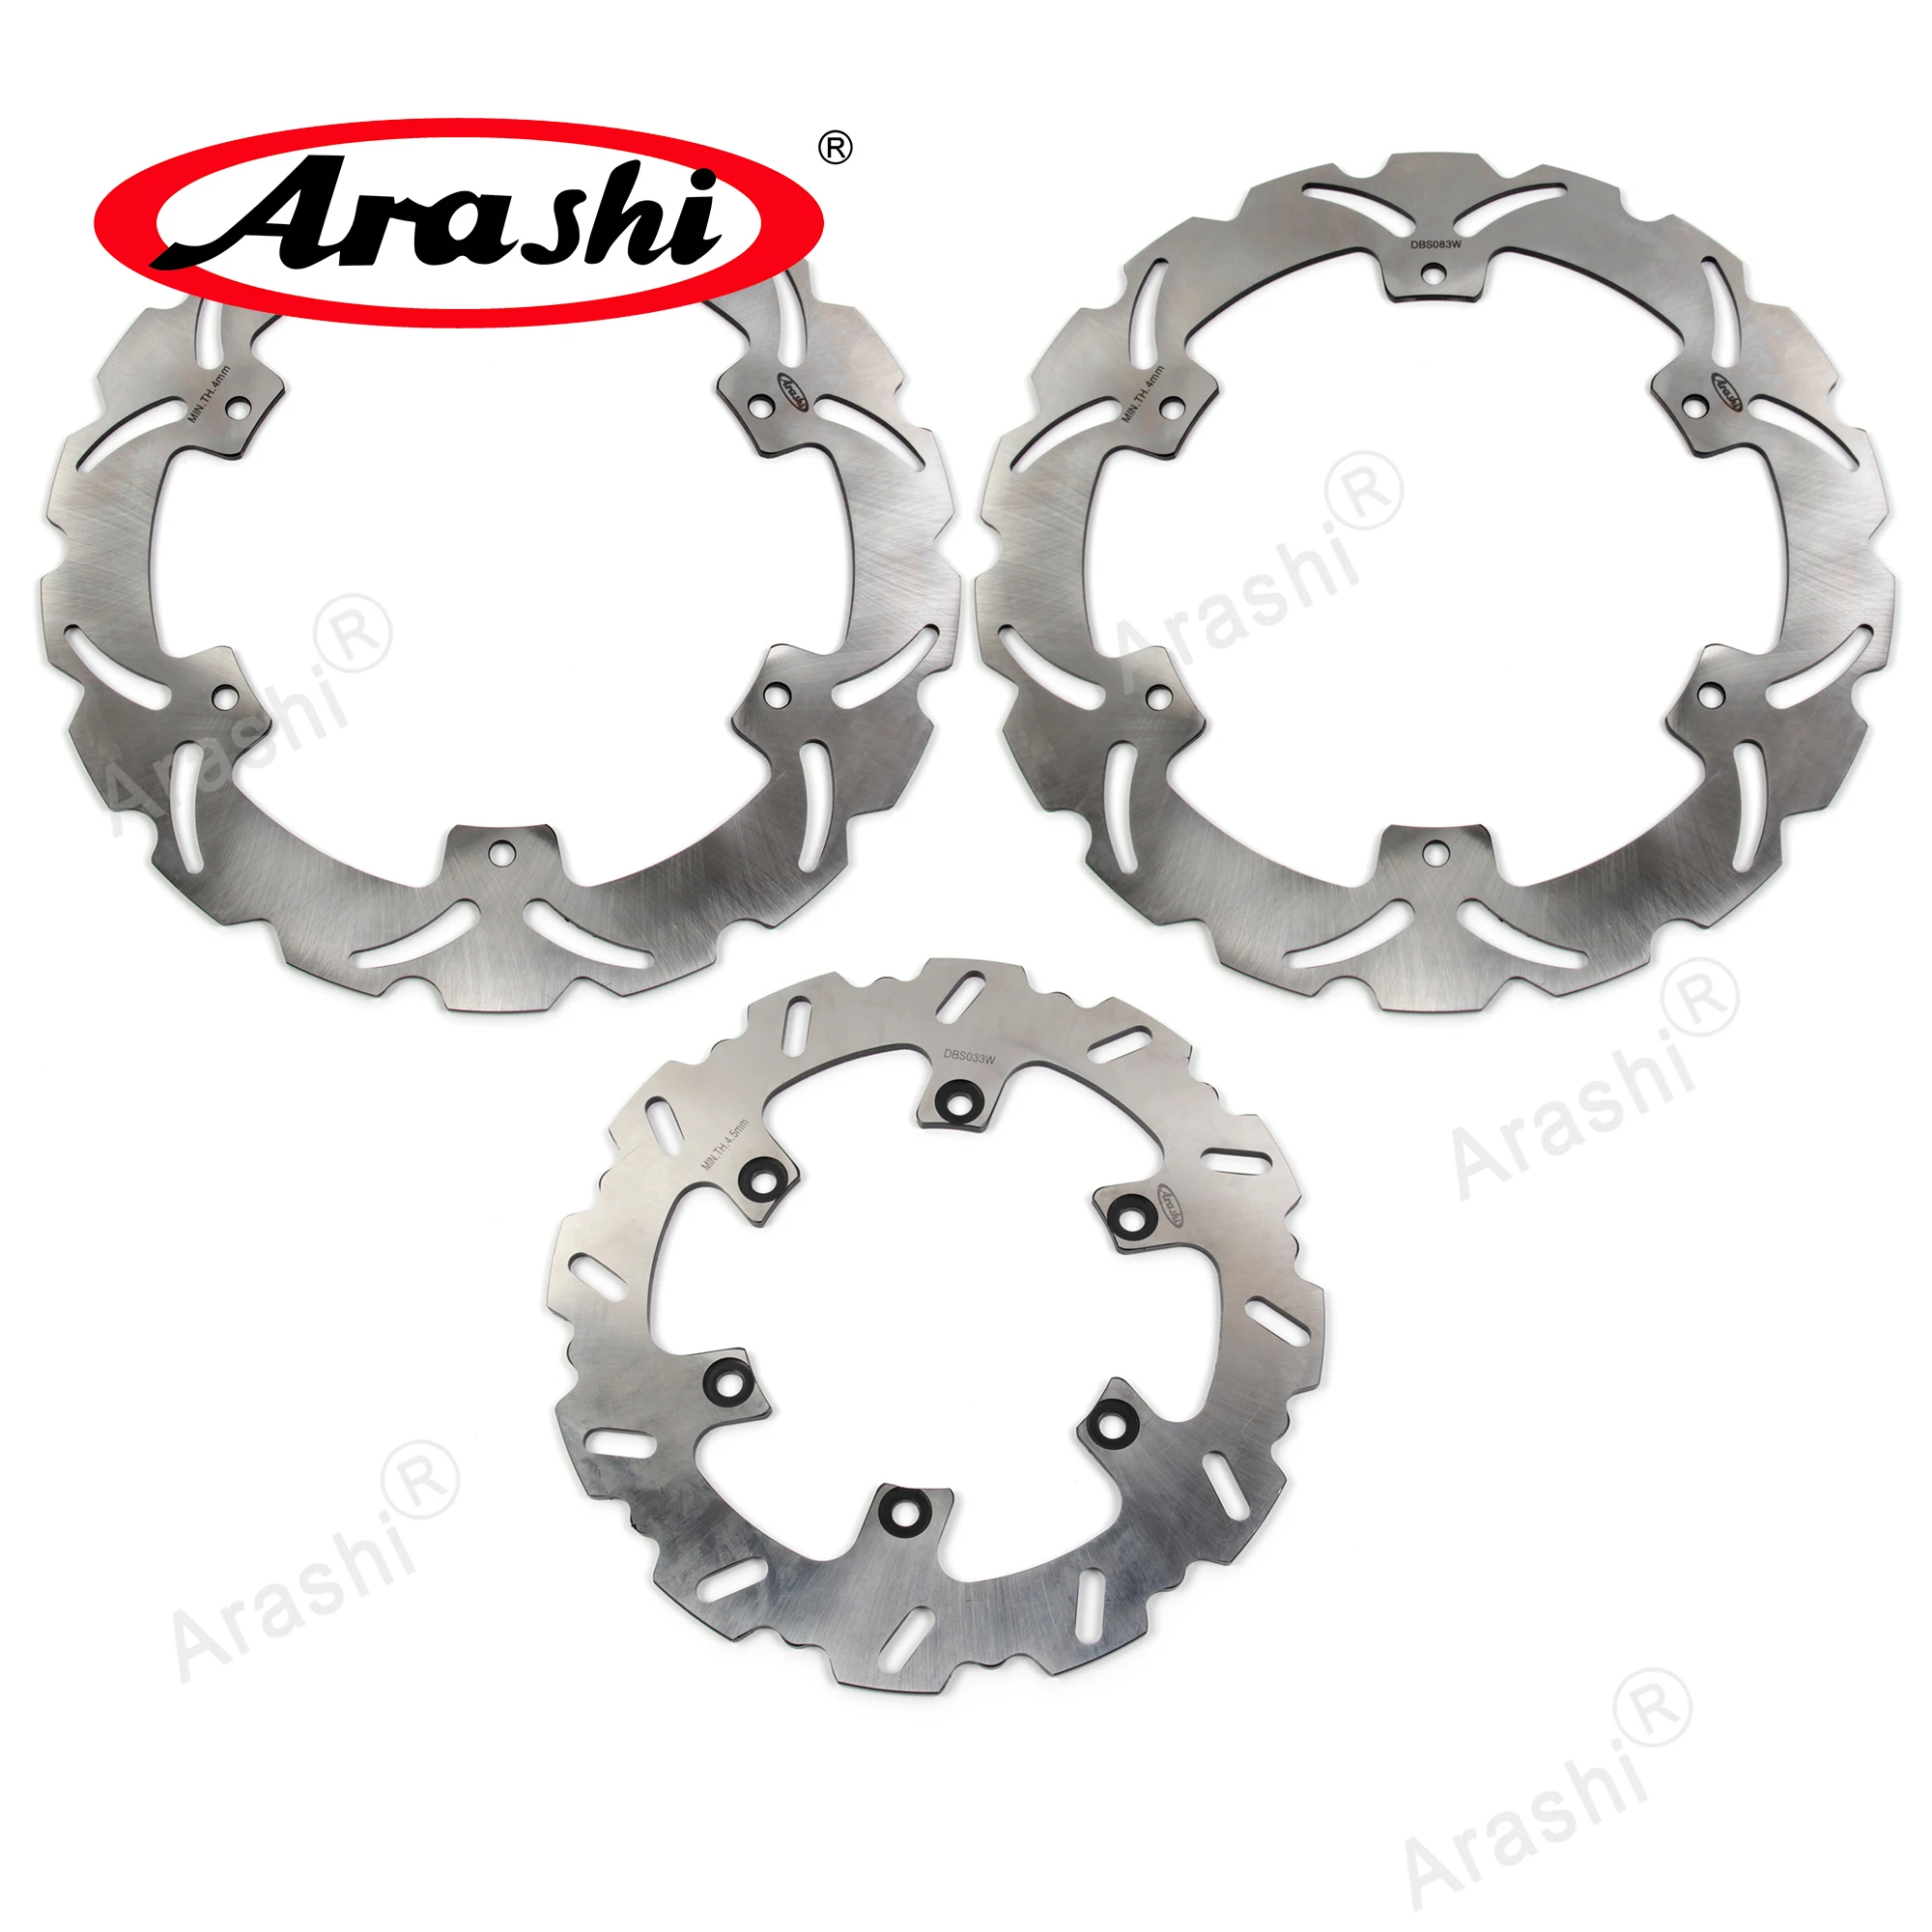 Arashi CNC Front Rear Brake Discs Brake Rotor For YAMAHA XJ S Diversion 900 1994 1995 1996 XJ900S Motorcycle Accessories Parts